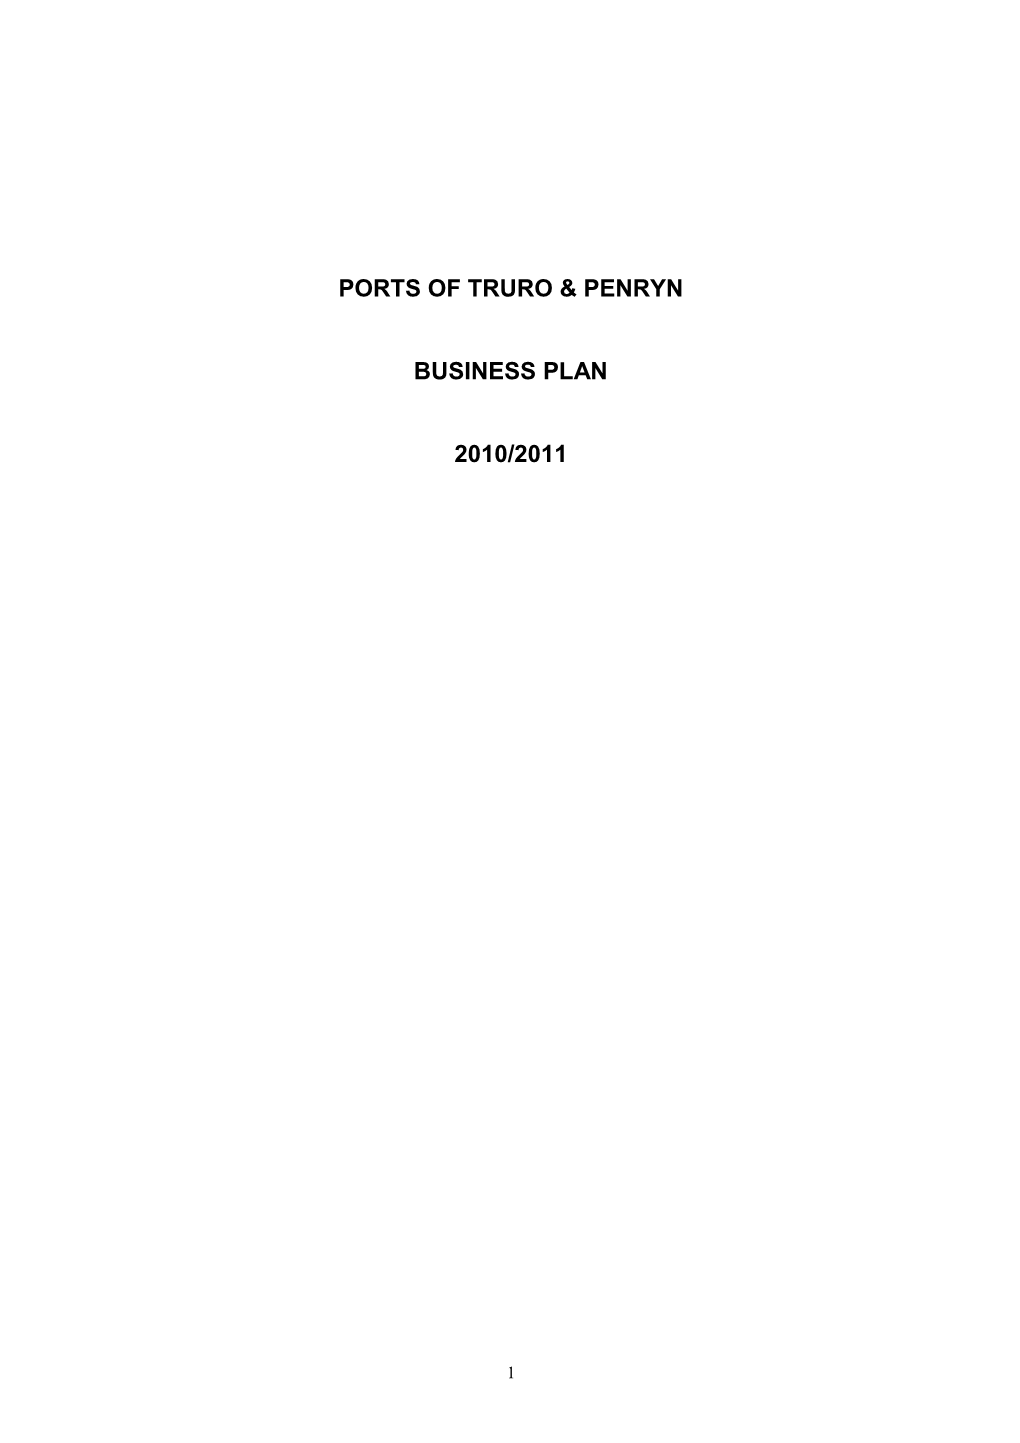 Ports of Truro & Penryn